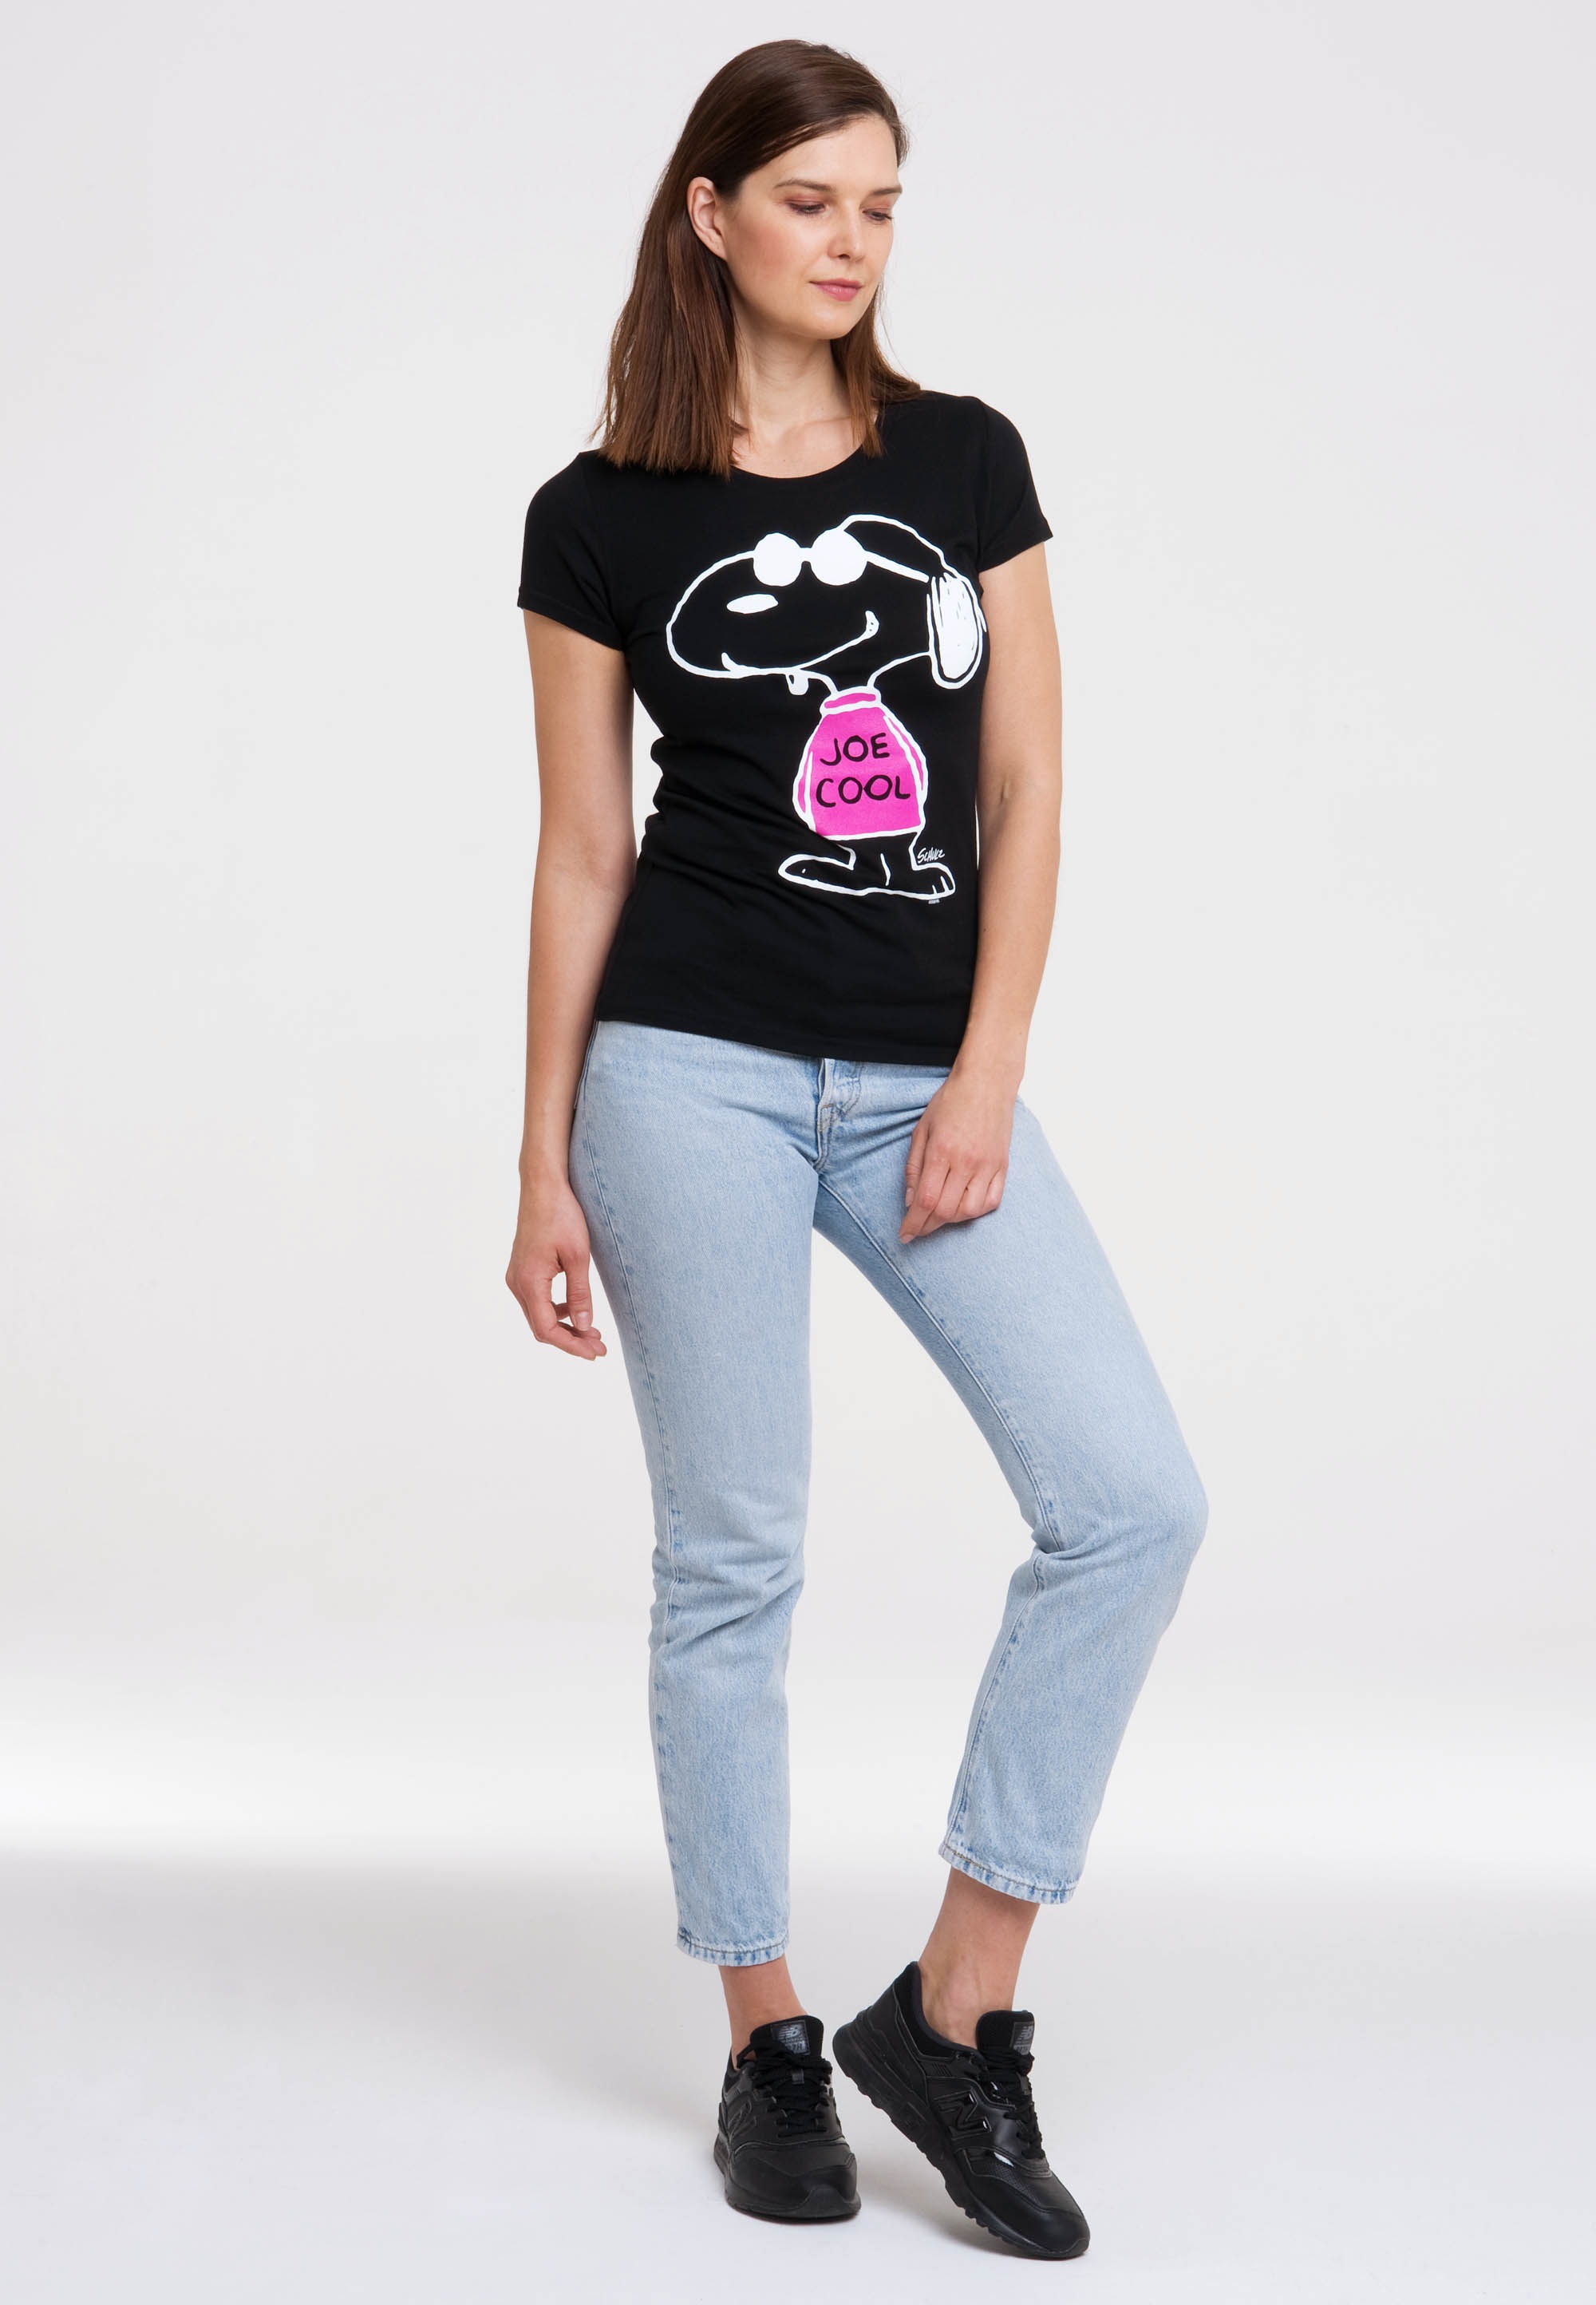 LOGOSHIRT T-Shirt »Peanuts - Snoopy - Joe Cool«, mit lizenziertem Originaldesign